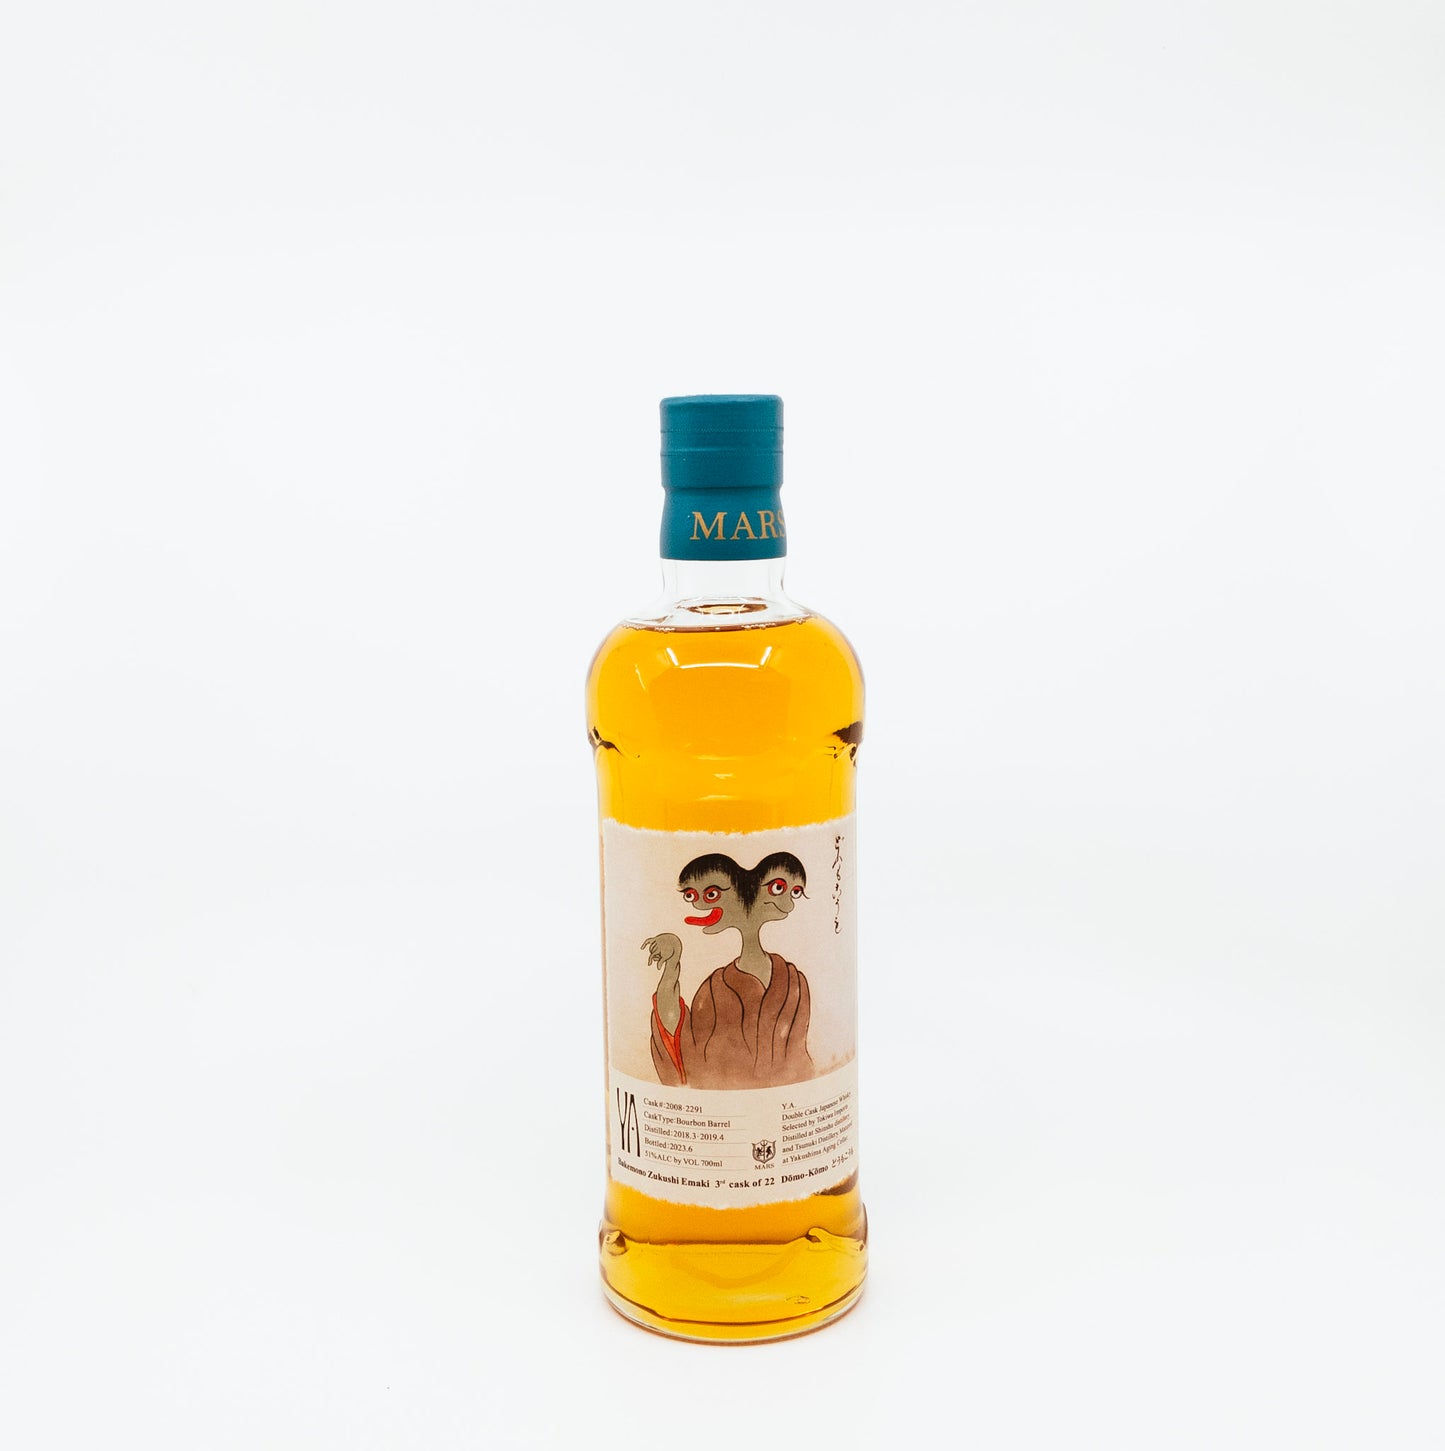 Single Malt Whisky, 'Y.A. Bakemono - Double Cask 2008, 2291', Mars Whisky